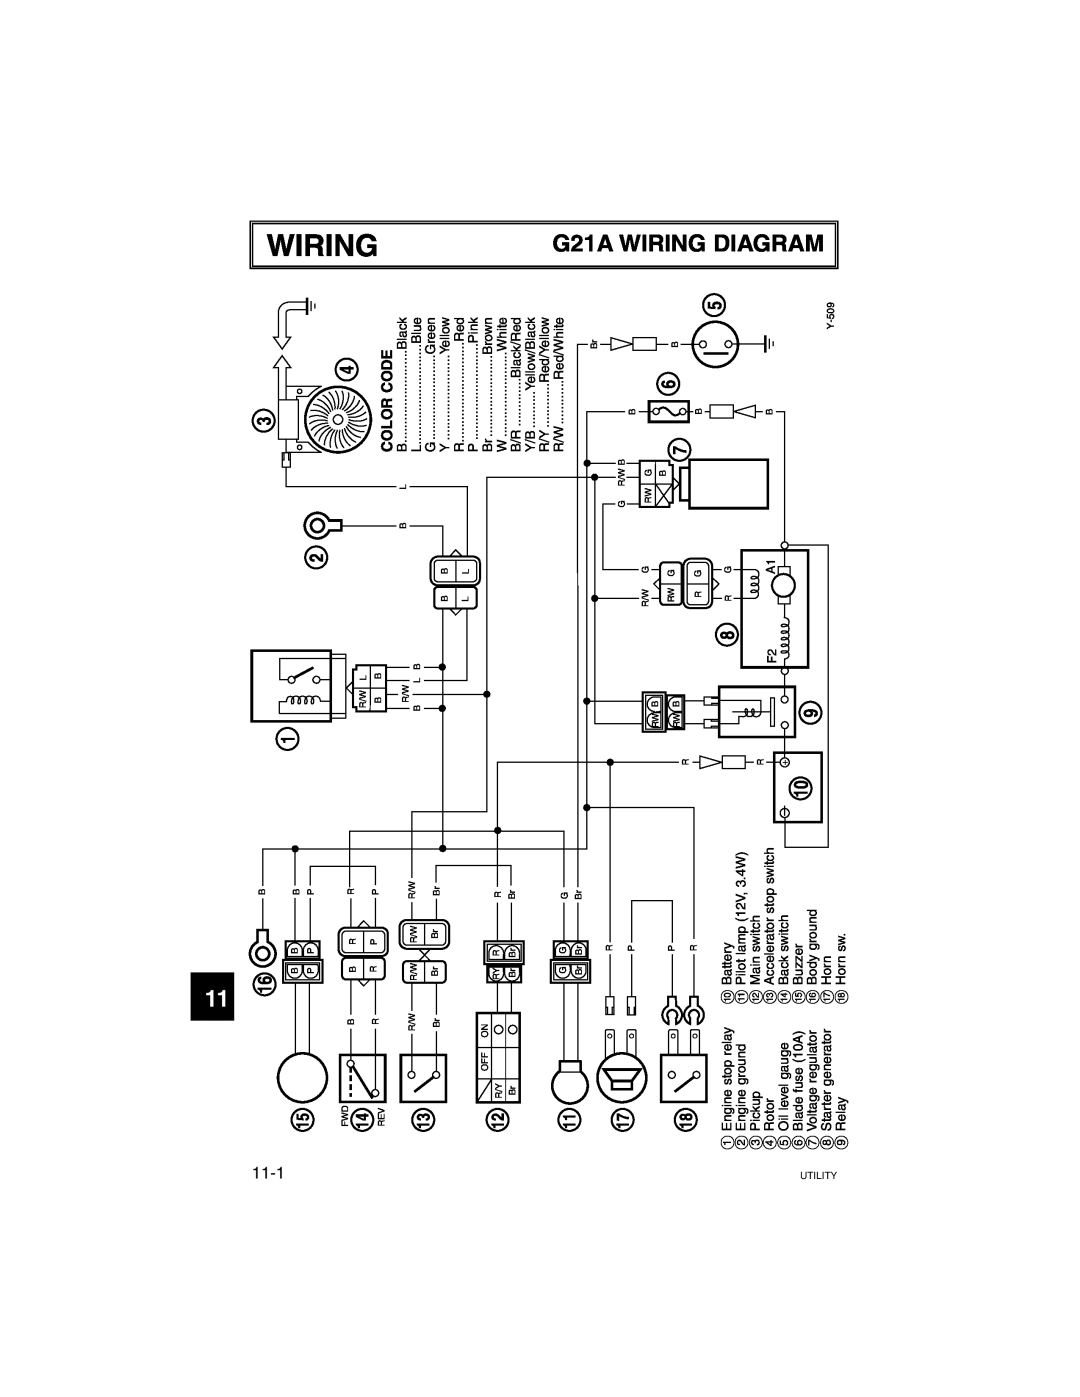 Yamaha manual Wiring, G21A WIRING DIAGRAM 